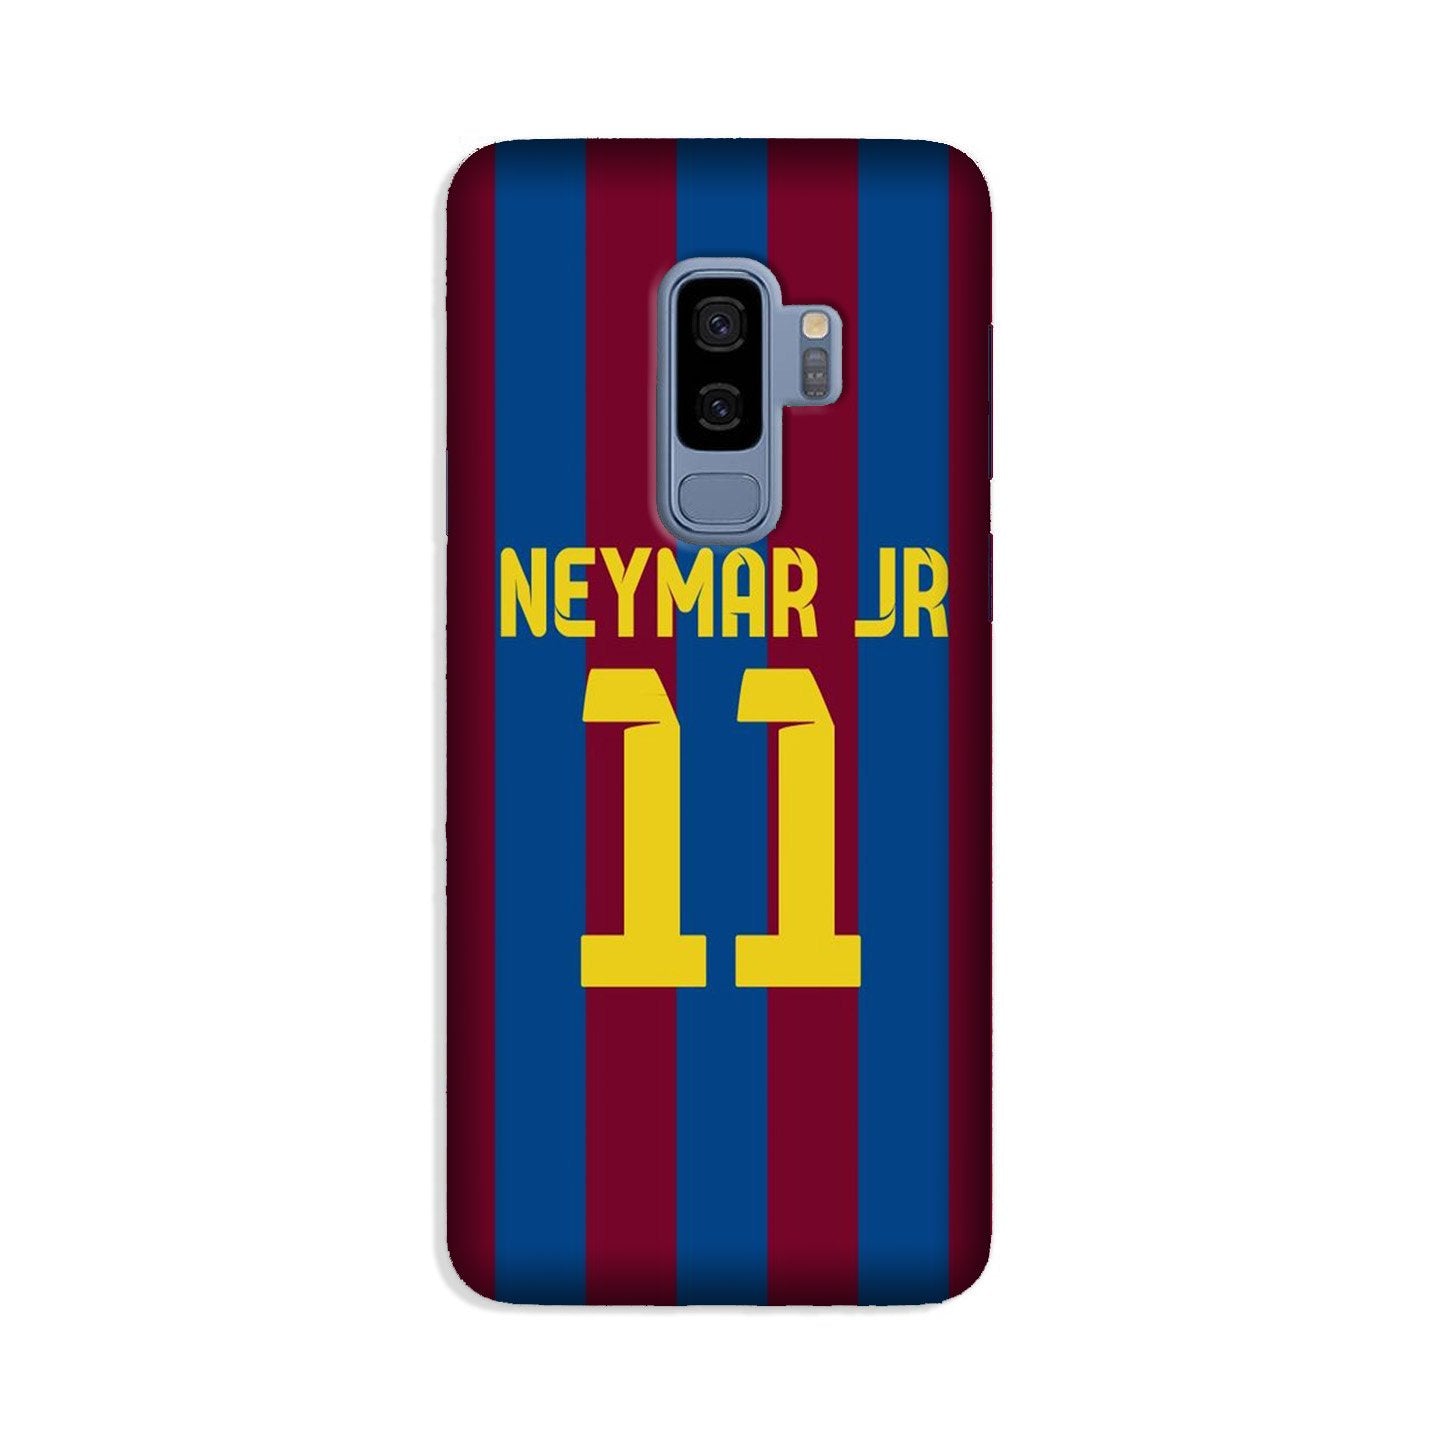 Neymar Jr Case for Galaxy S9 Plus(Design - 162)